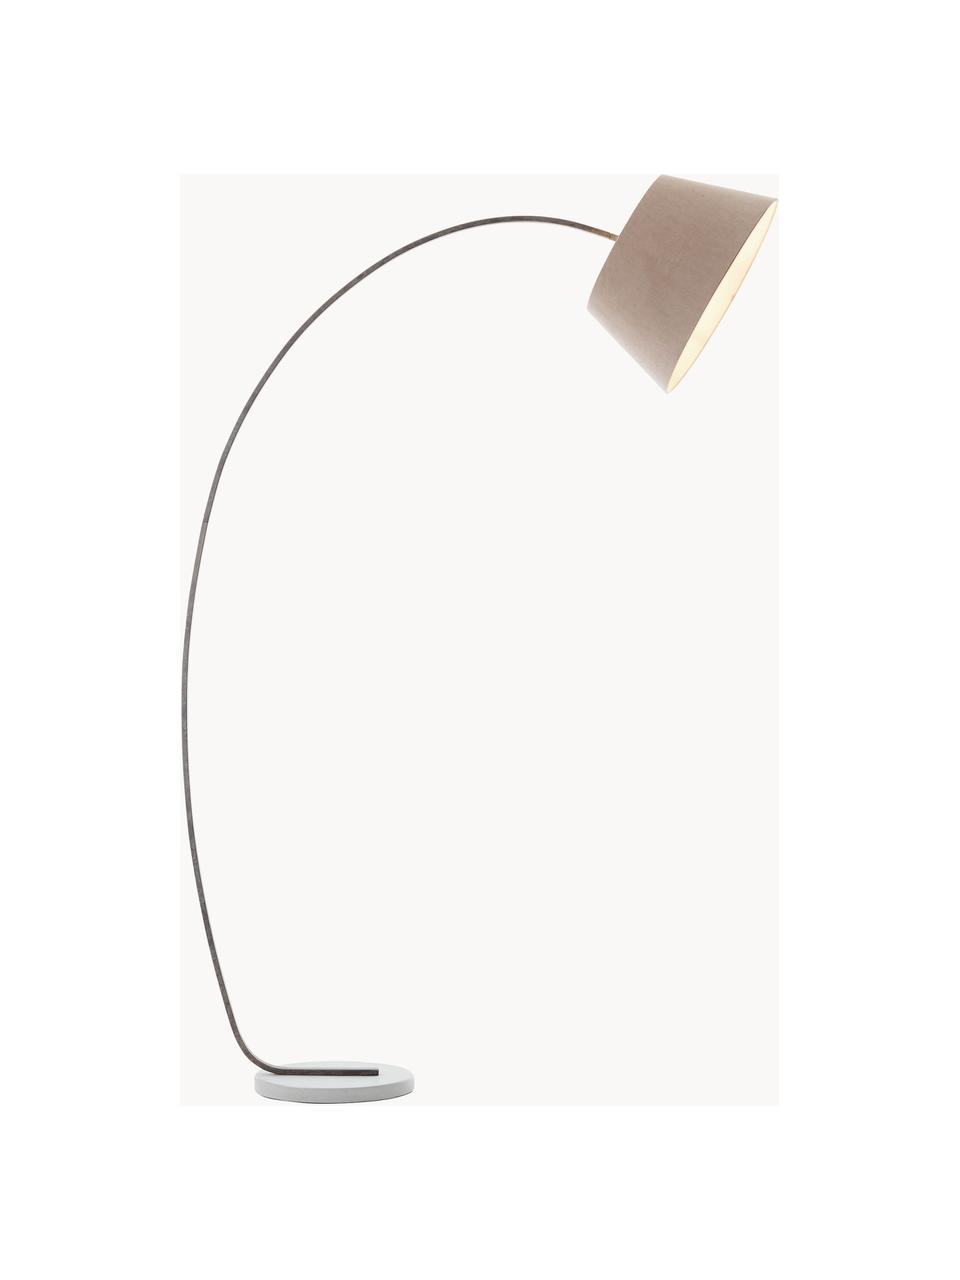 Grosse Bogenlampe Brok mit Antik-Finish, Lampenschirm: Flanellstoff, Sockel: Beton, Beige, Dunkelgrau, H 196 cm